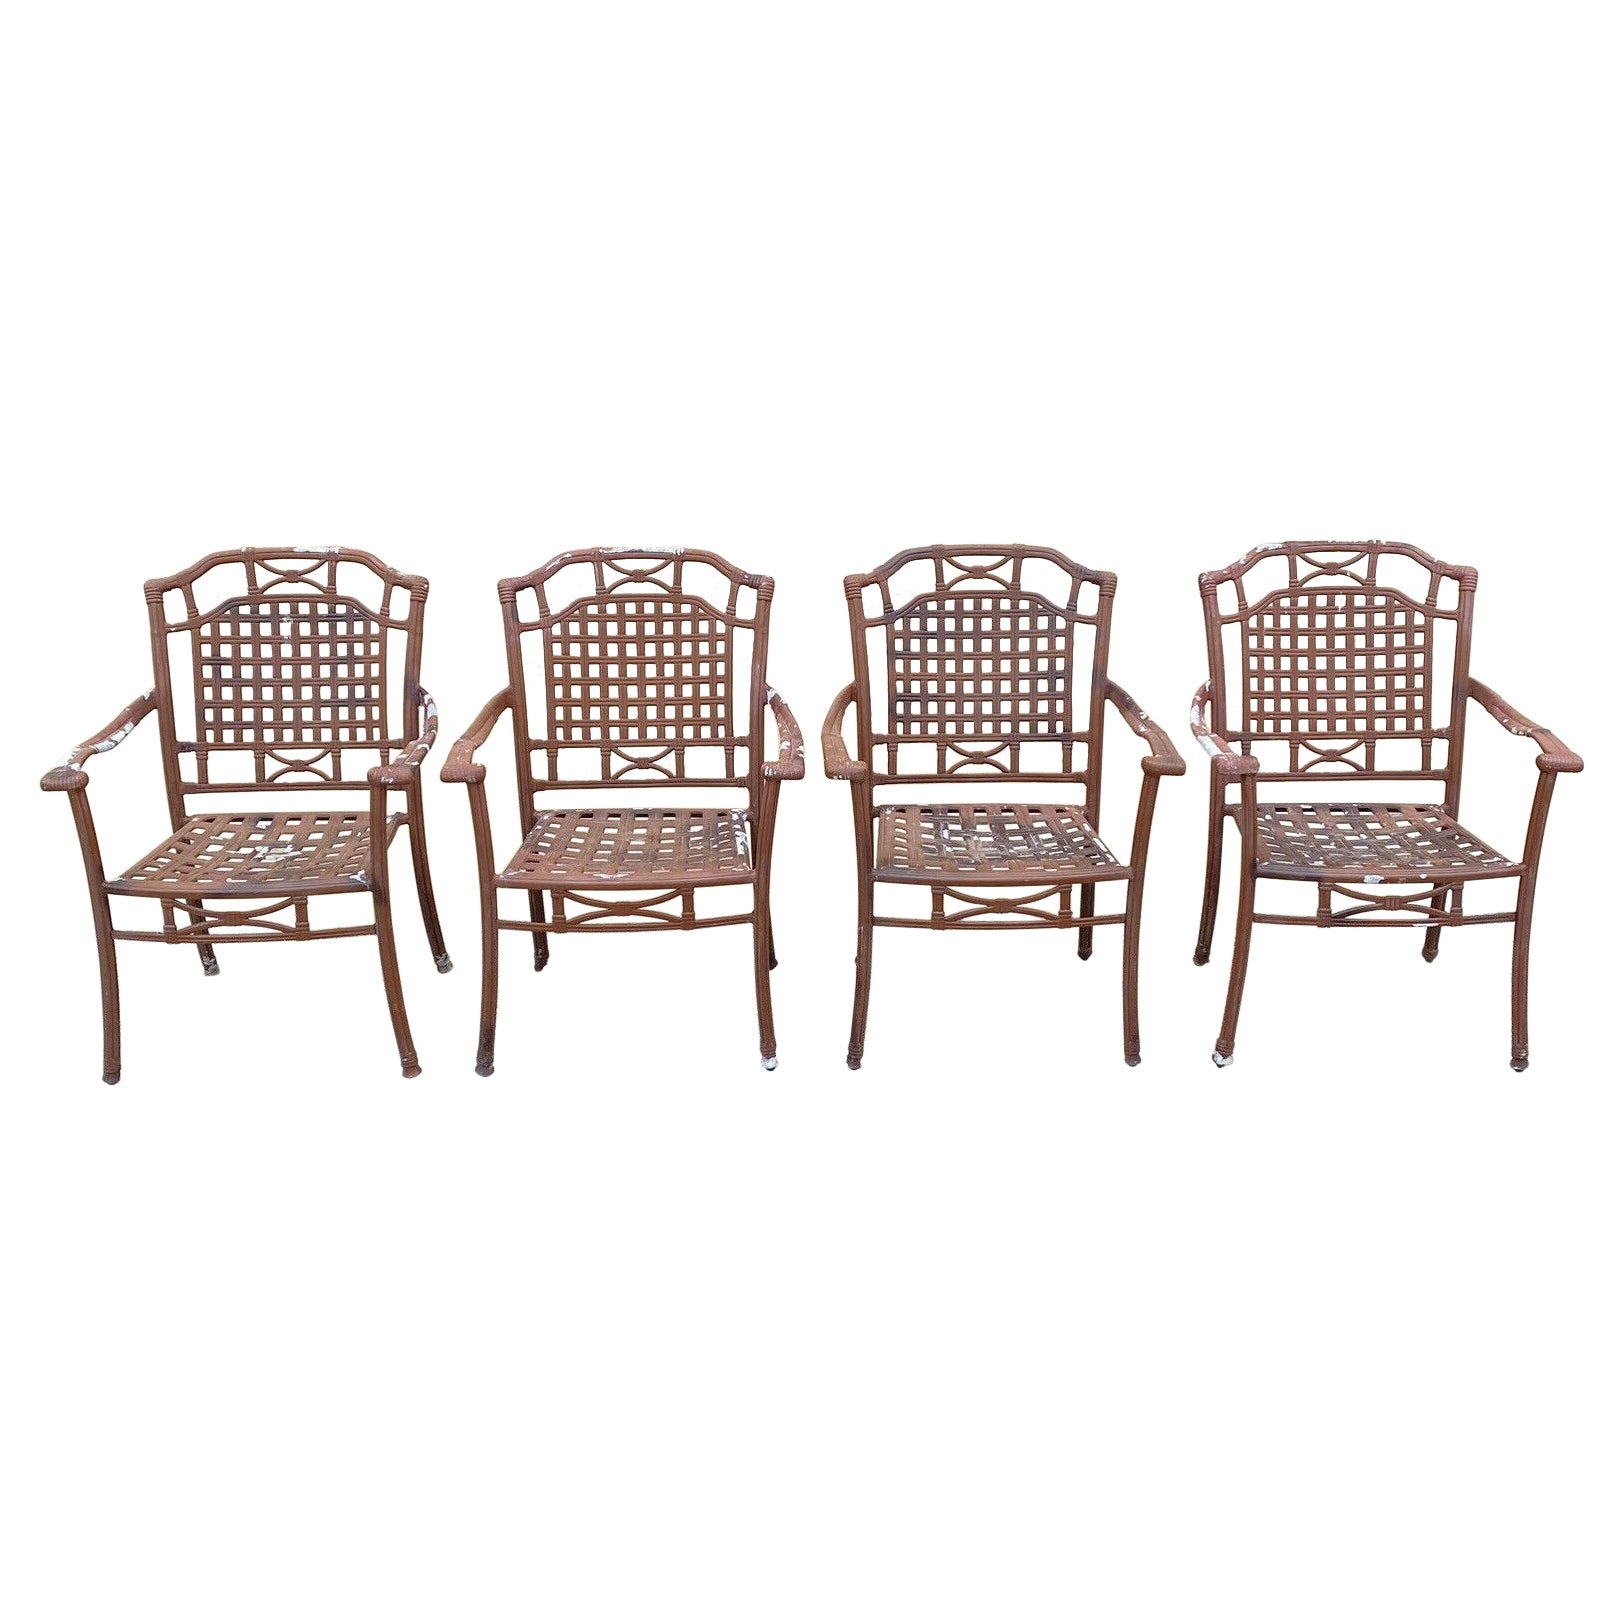 Cast Aluminum Basket Weave Lattice Rattan Patio Outdoor Arm Chairs - Set of 4 For Sale